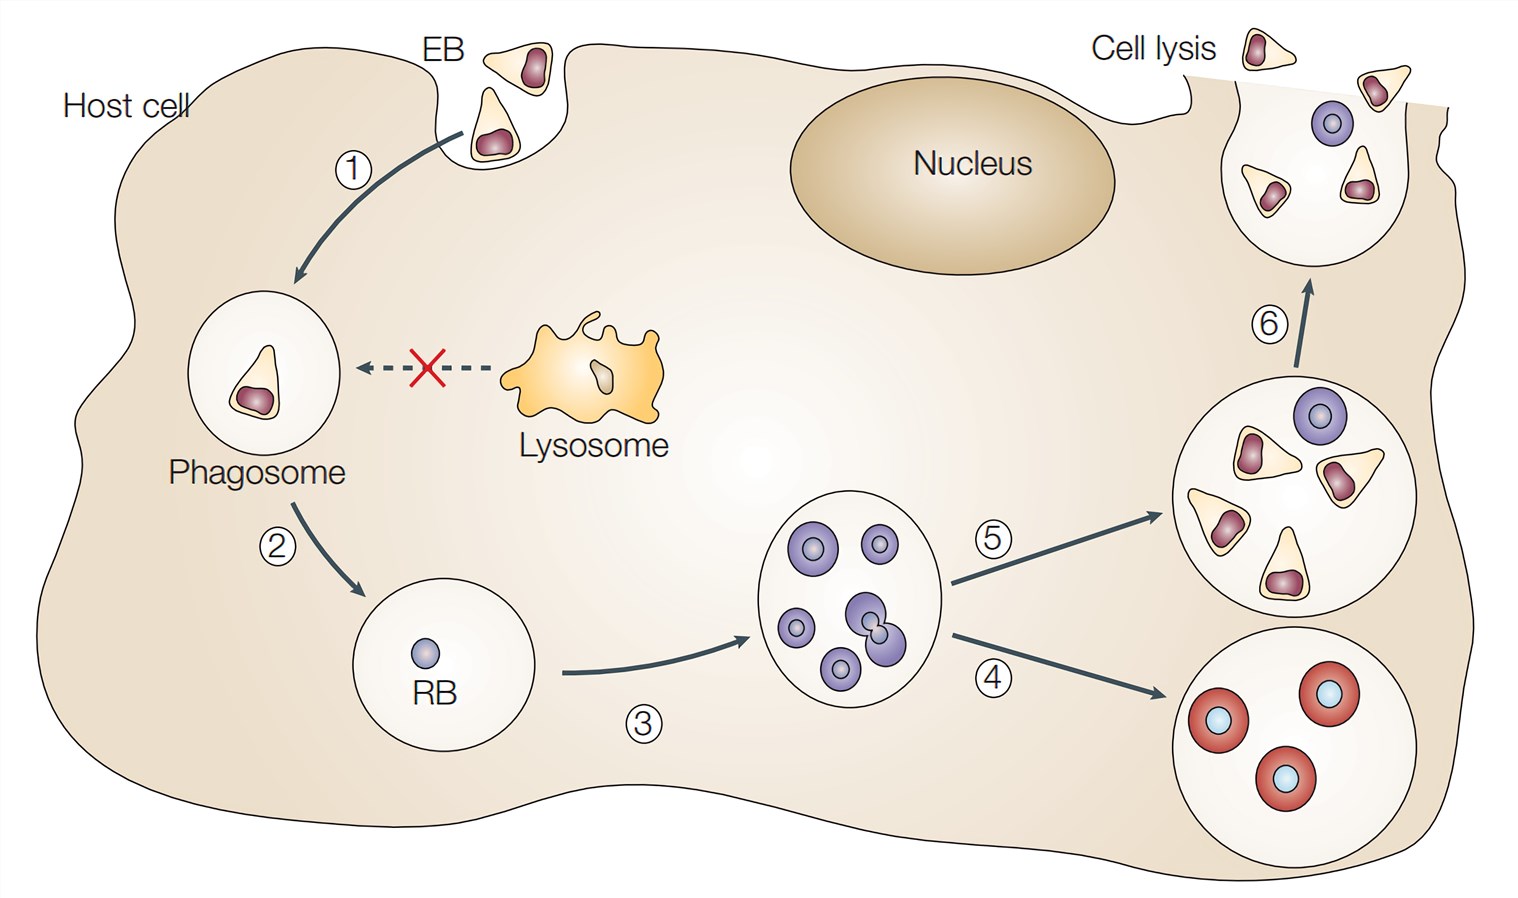 The developmental lifecycle of Chlamydia pneumoniae.